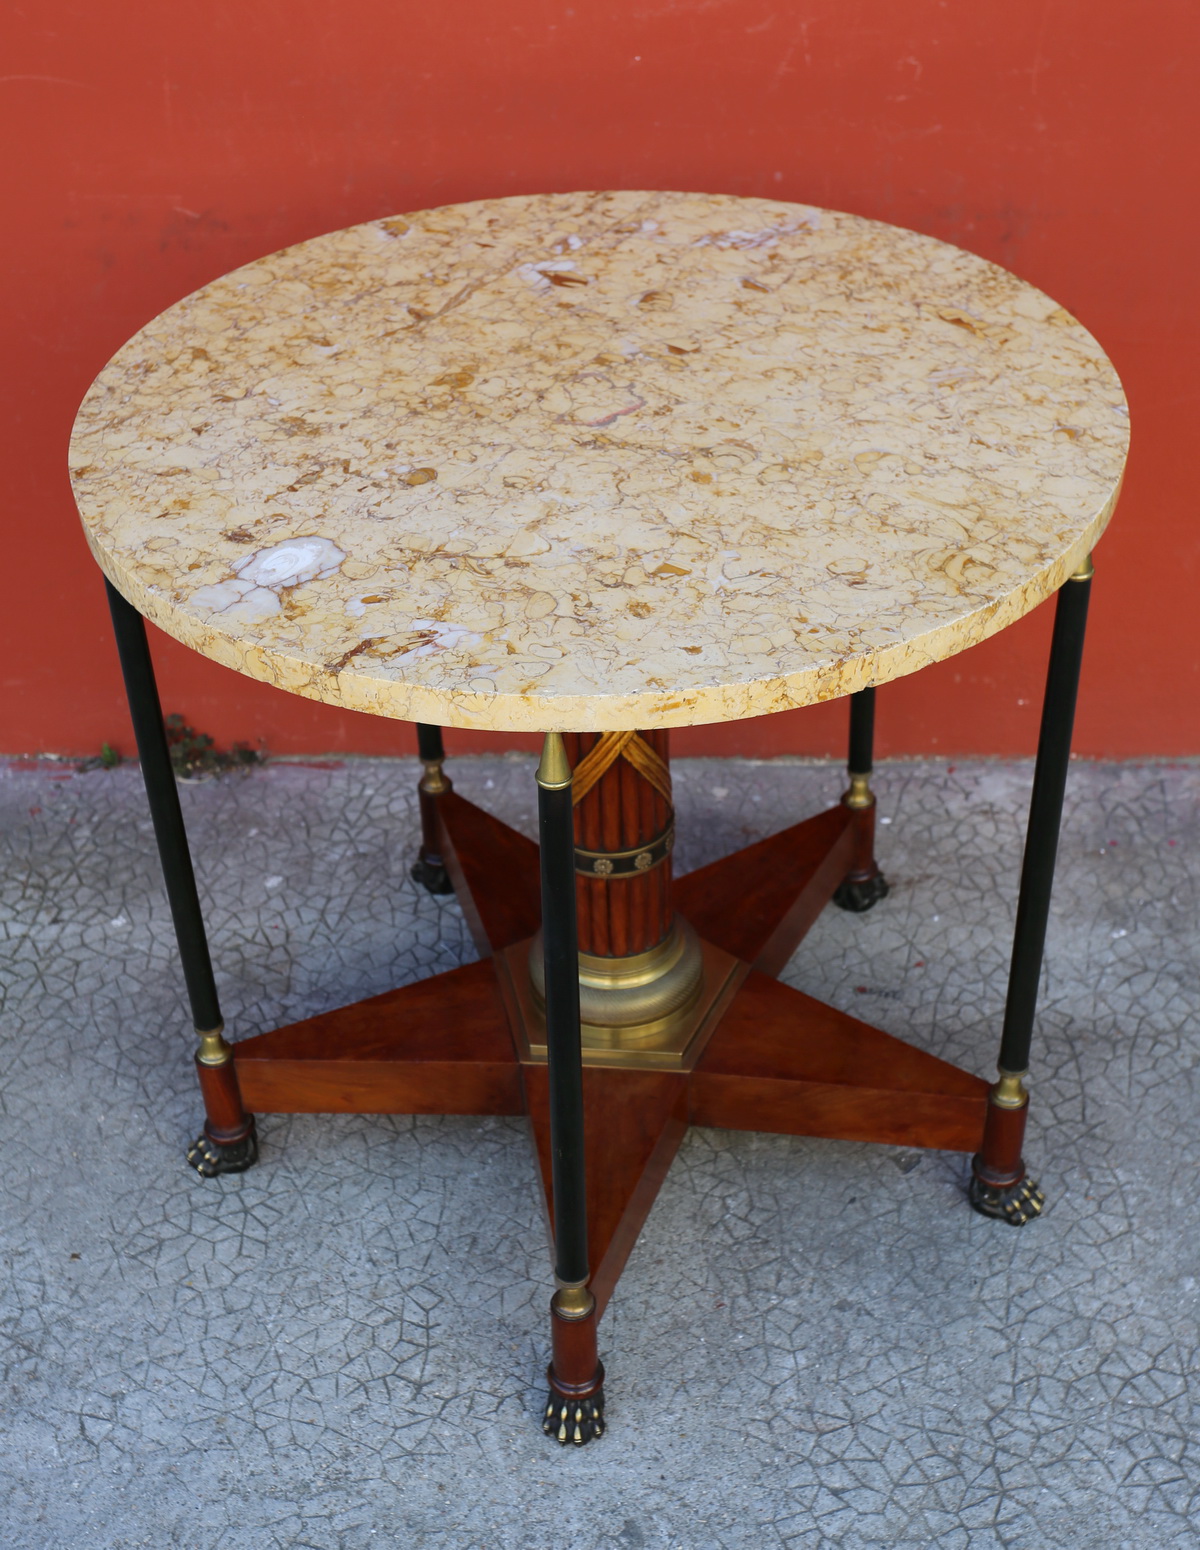 Empire style pedestal table early twentieth